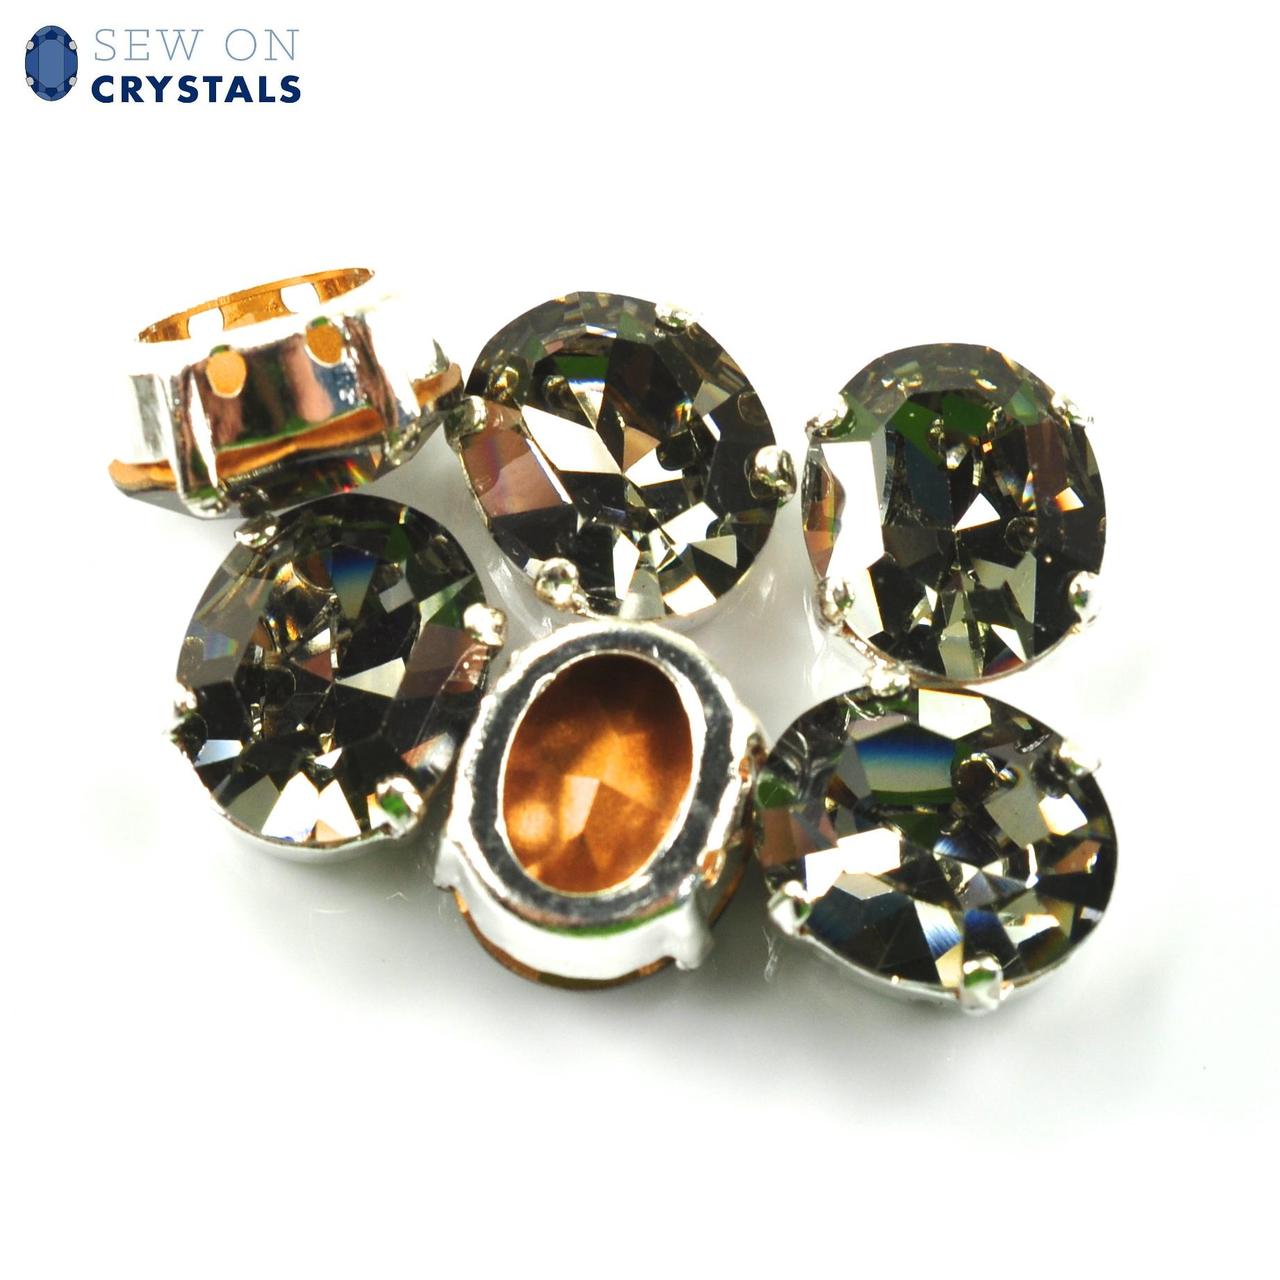 Black Diamond 12x10mm Oval Sew On Crystals - 6 Pieces